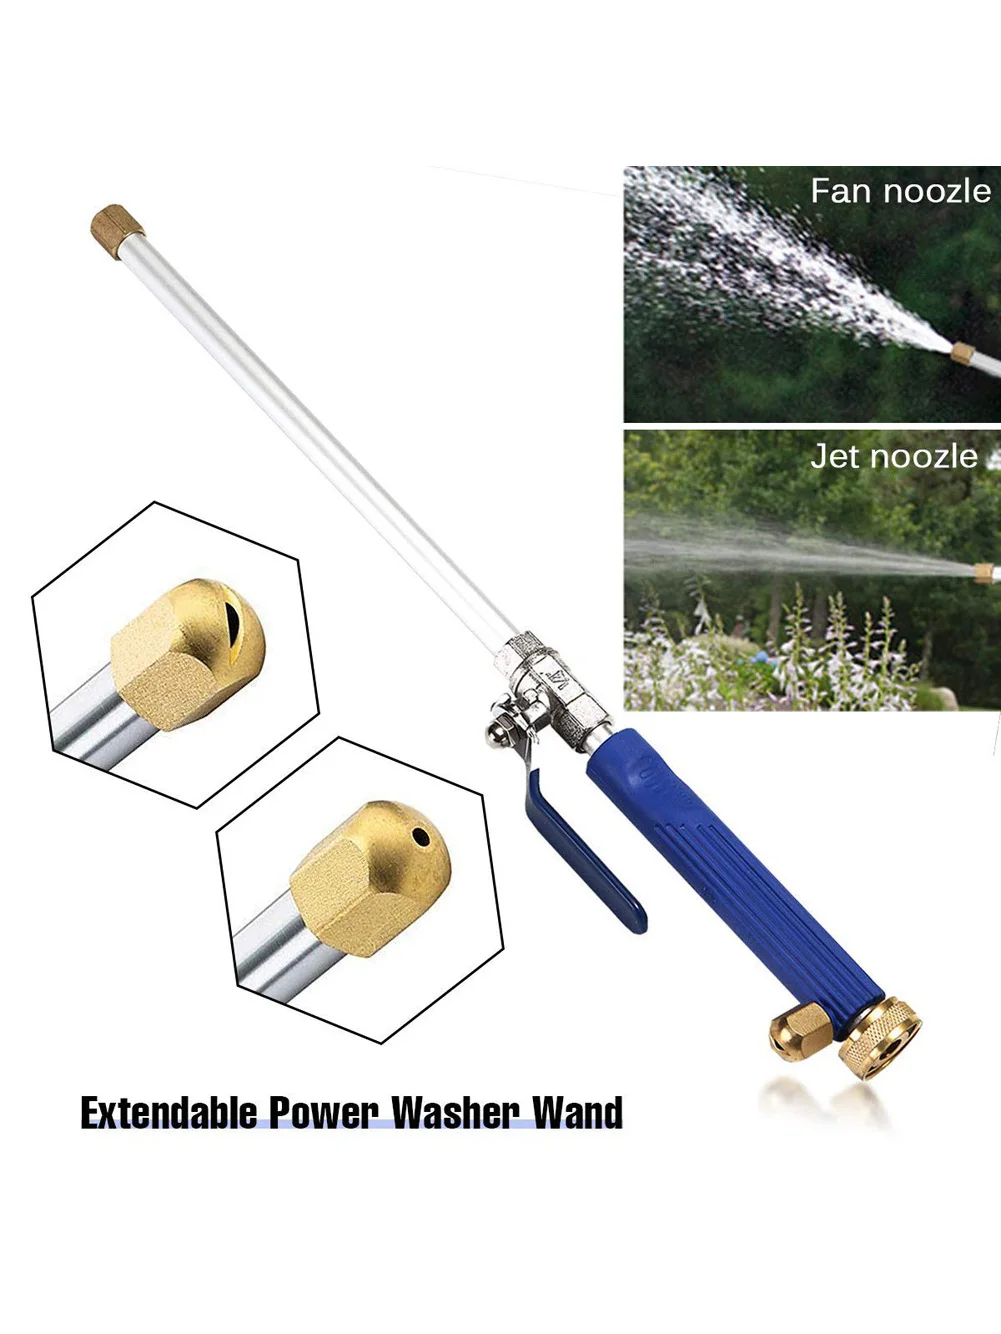 

Car High Pressure Water Gun 46cm Jet Garden Washer Hose Wand Nozzle Sprayer Watering Spray Sprinkler Cleaning Tool